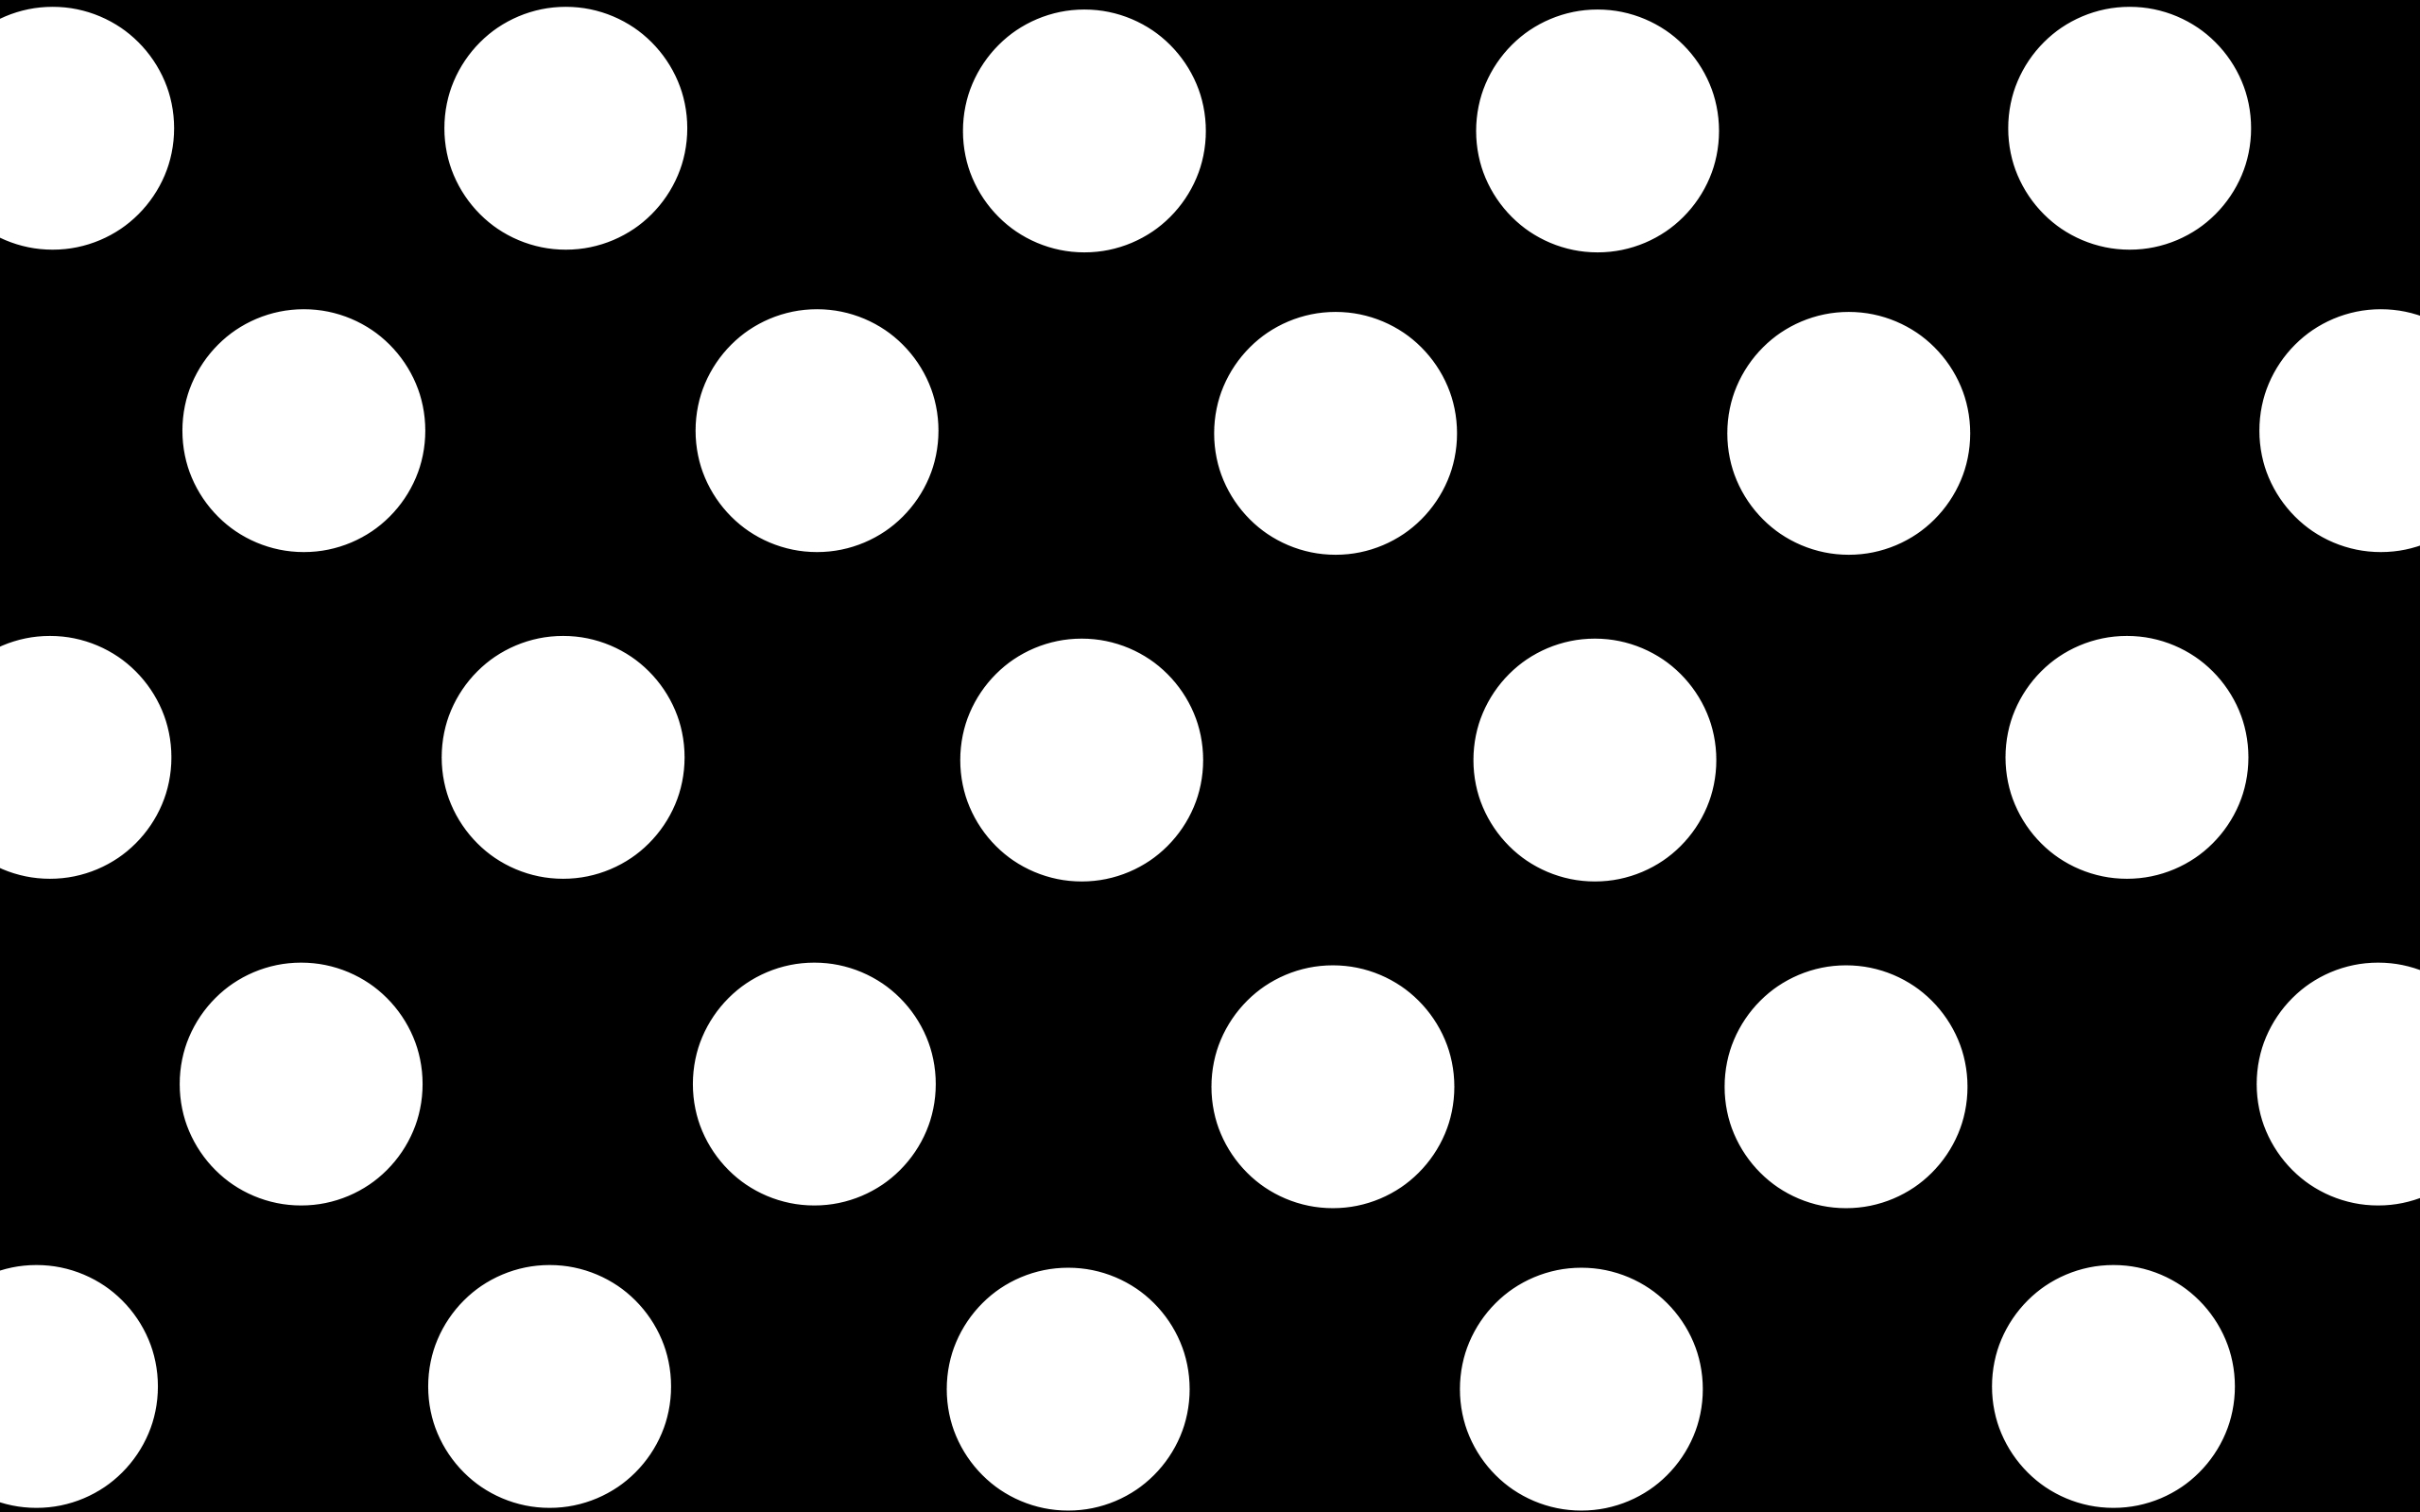 Black Polka Dot Background Wallpapers Hd Wallpaper 2560x1600px 2560x1600